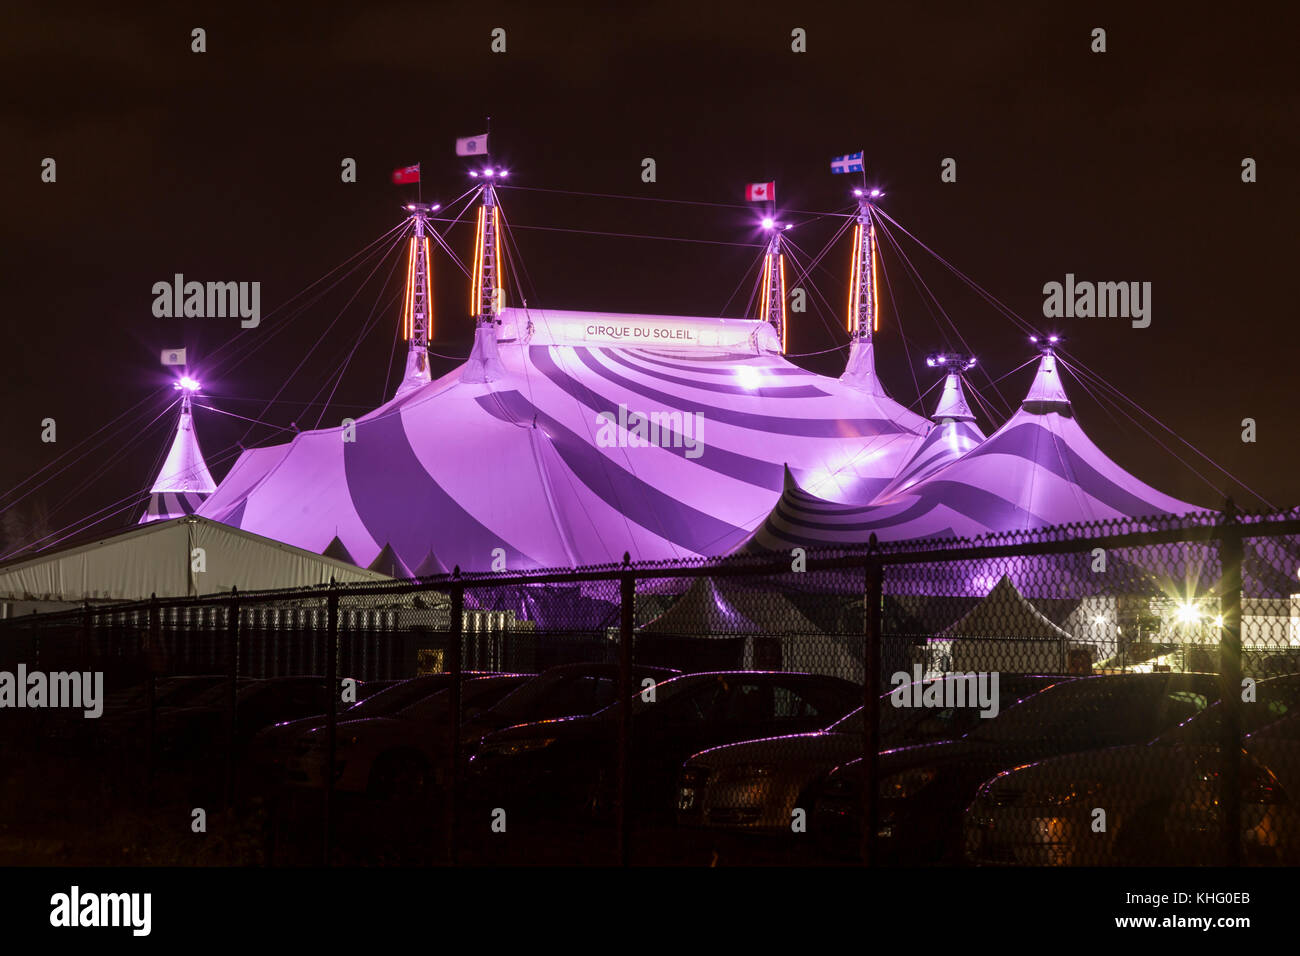 Toronto, Canada - Oct 13, 2017: Cirque du Soleil circus tent big top illuminated at night. Toronto, Province of Ontario, Canada Stock Photo